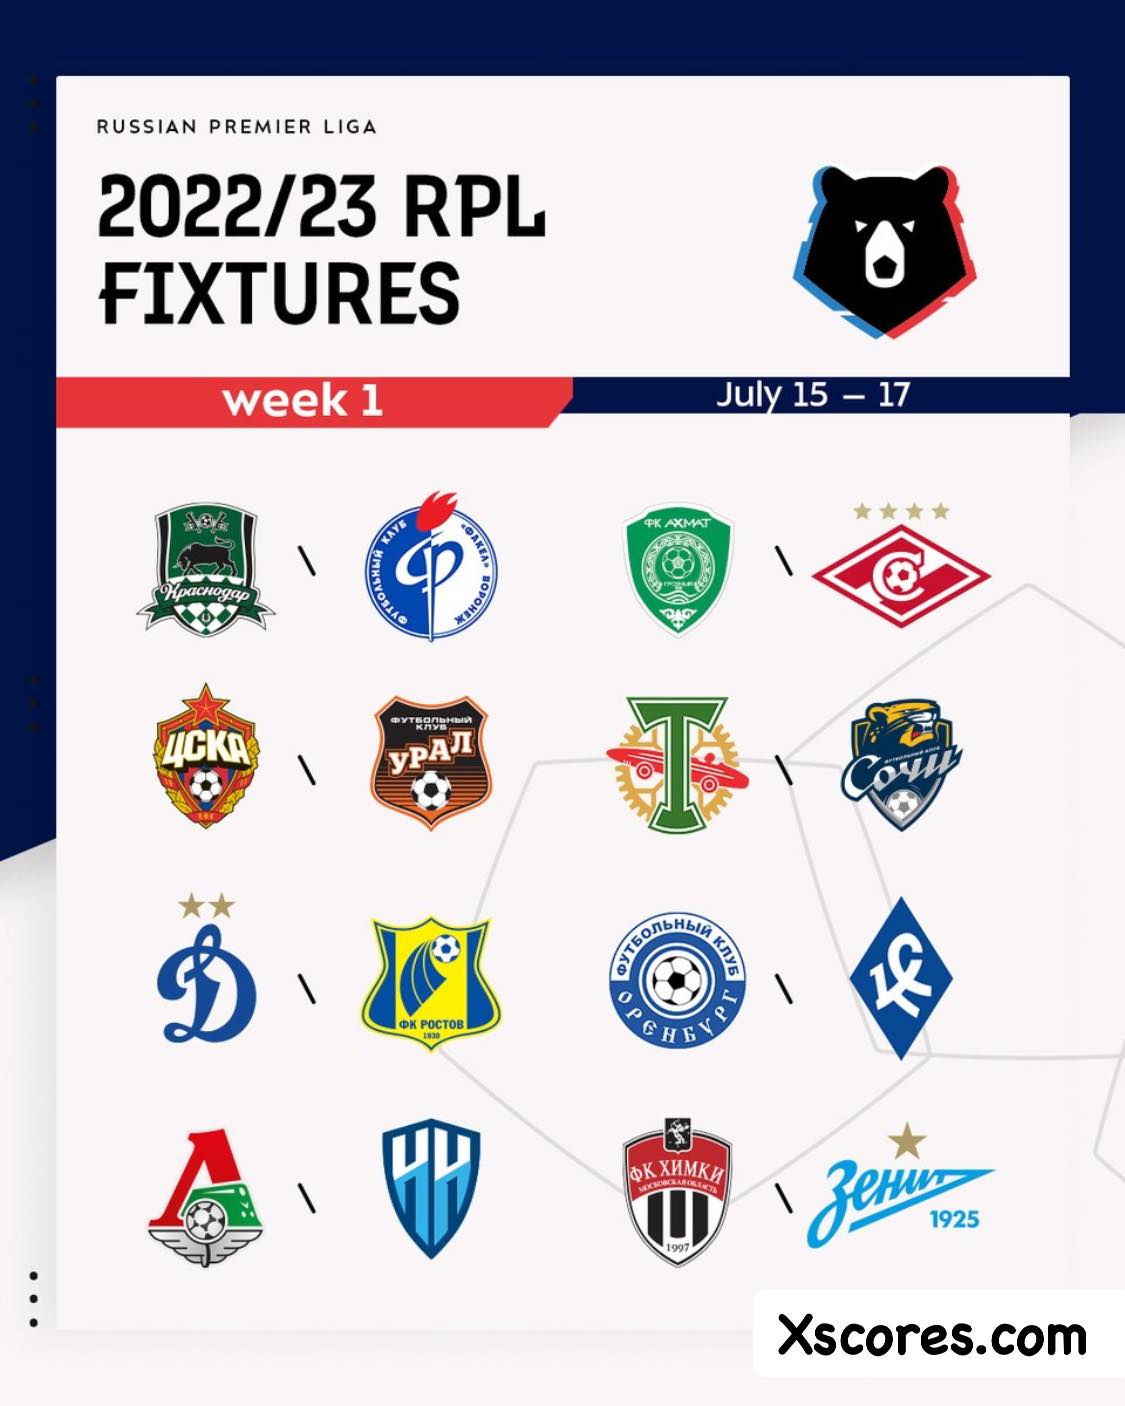 Premier League fixtures released for the 2022/2023 season